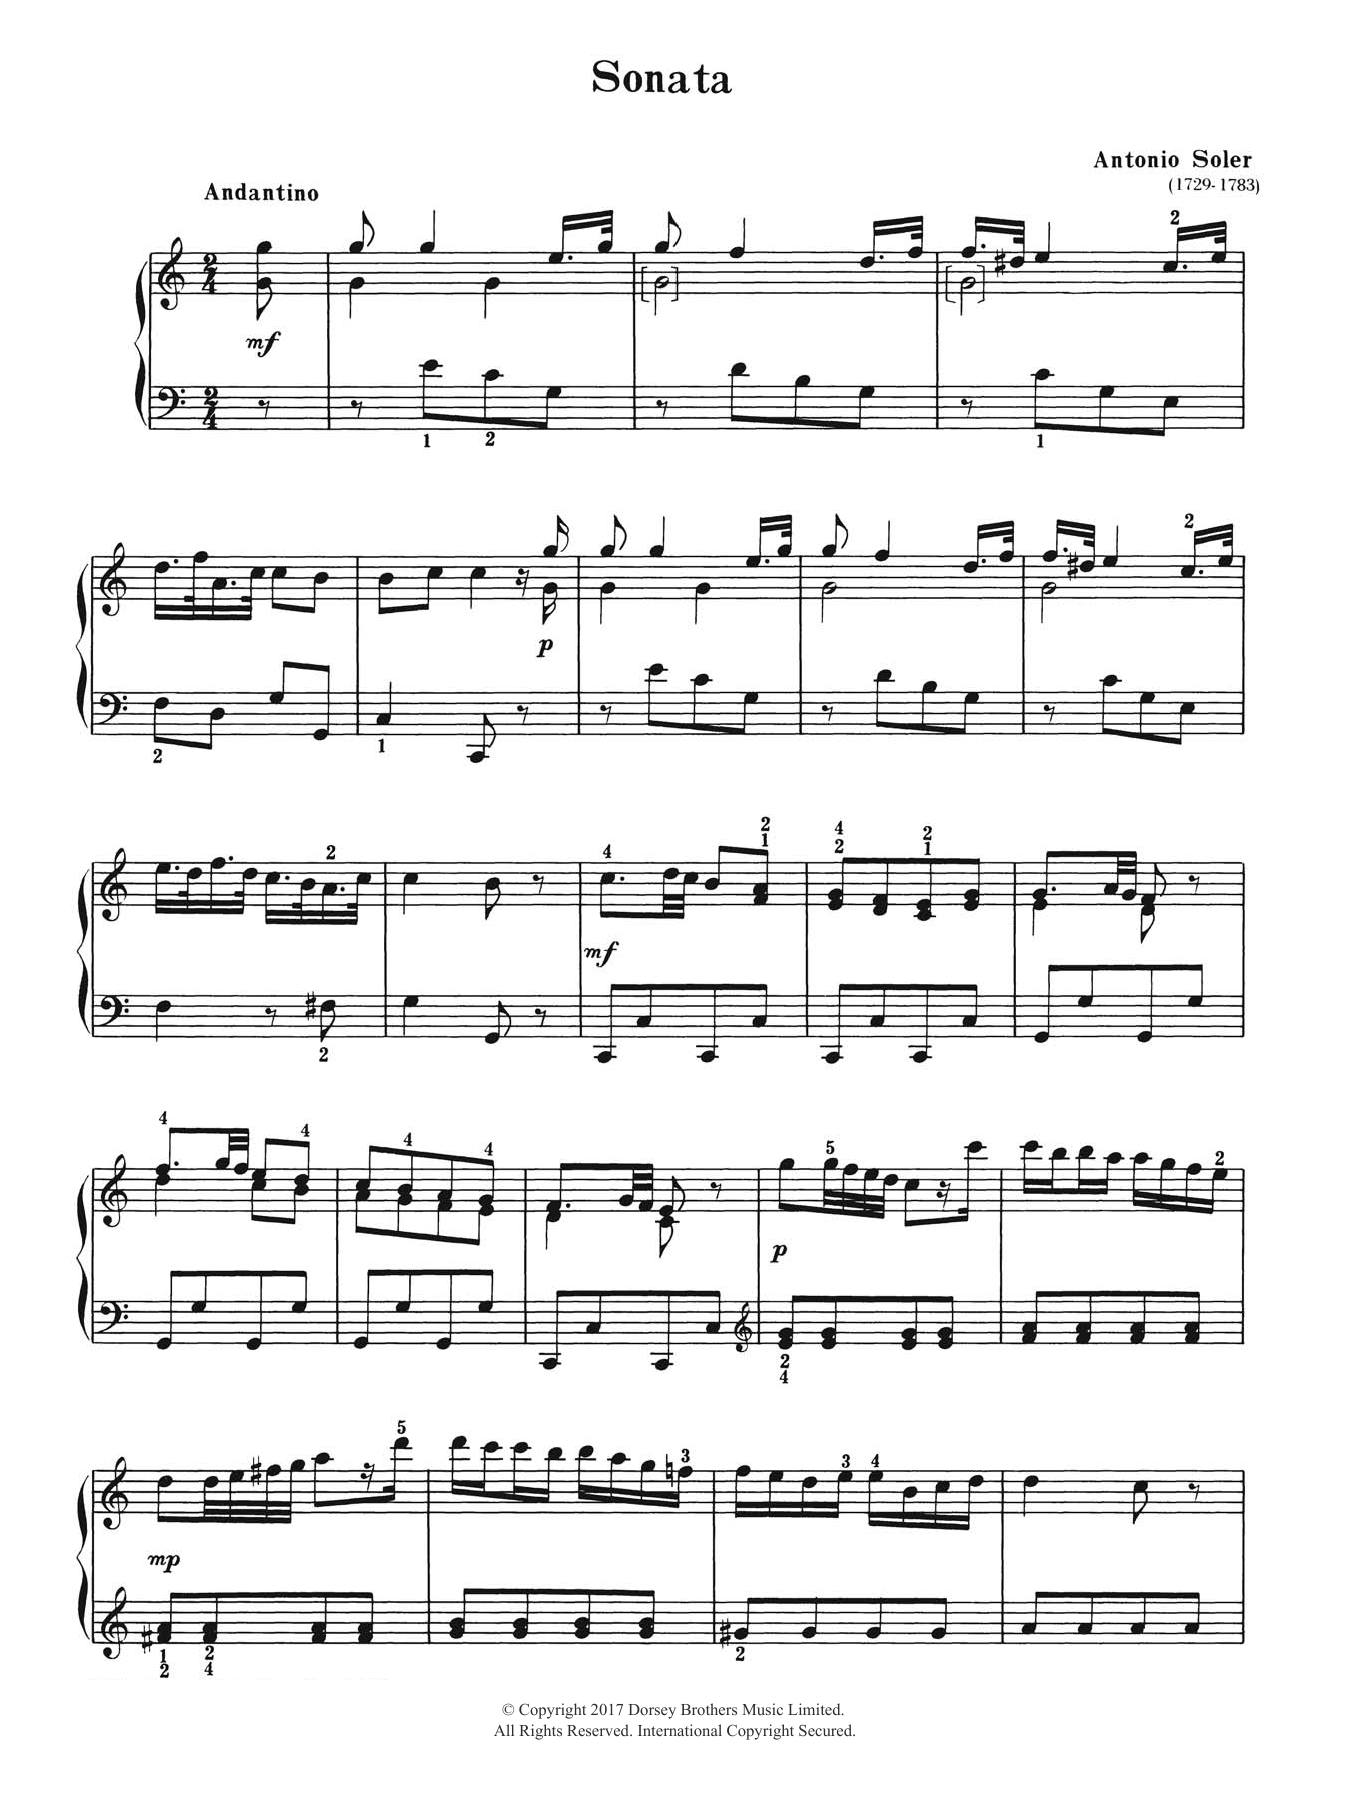 Antonio Soler Sonata Sheet Music Notes & Chords for Piano - Download or Print PDF